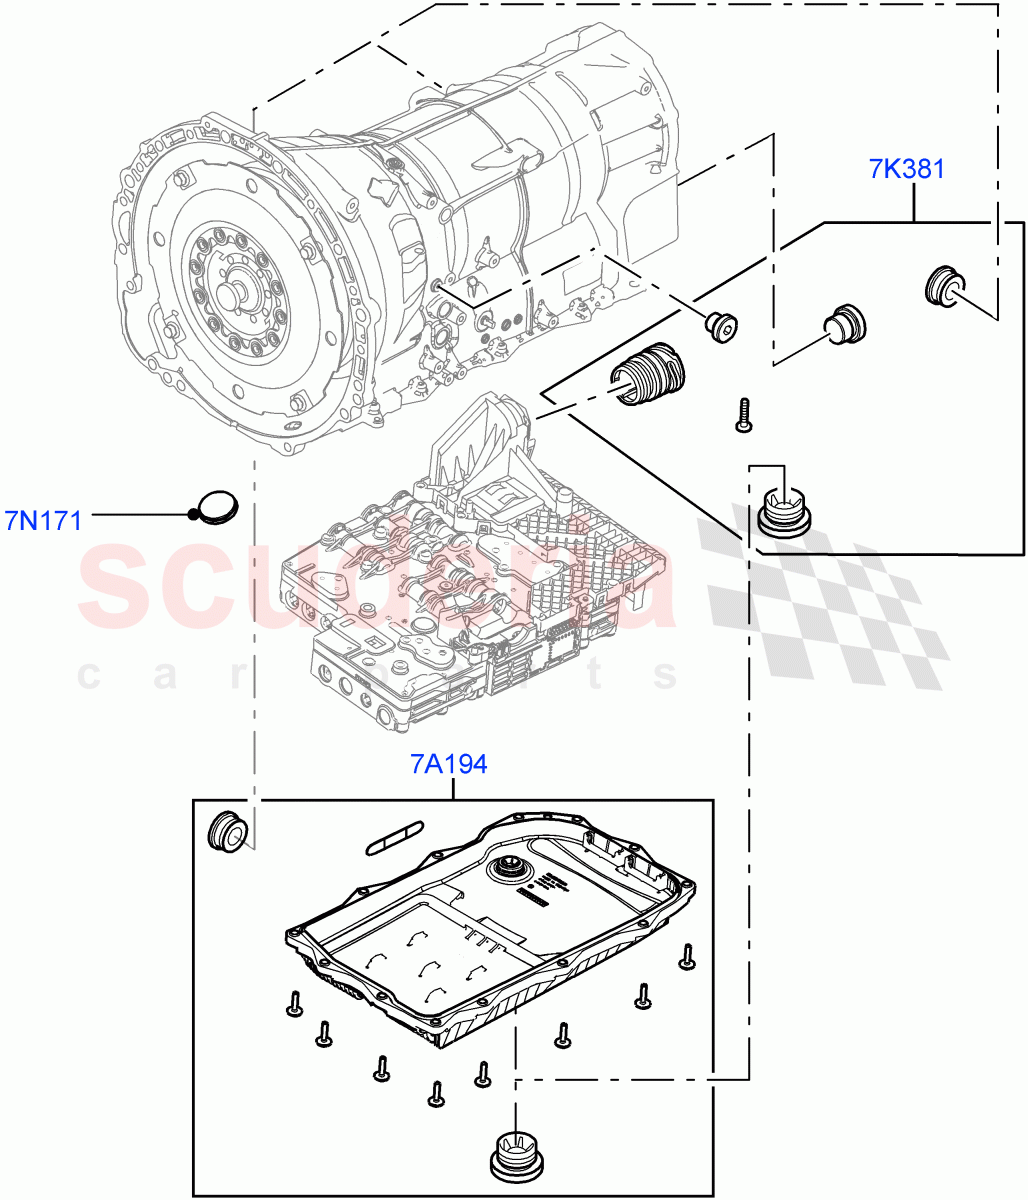 Transmission External Components(Nitra Plant Build)(2.0L I4 DSL HIGH DOHC AJ200,8 Speed Auto Trans ZF 8HP70 4WD,5.0 Petrol AJ133 DOHC CDA)((V)FROMK2000001) of Land Rover Land Rover Defender (2020+) [2.0 Turbo Petrol AJ200P]